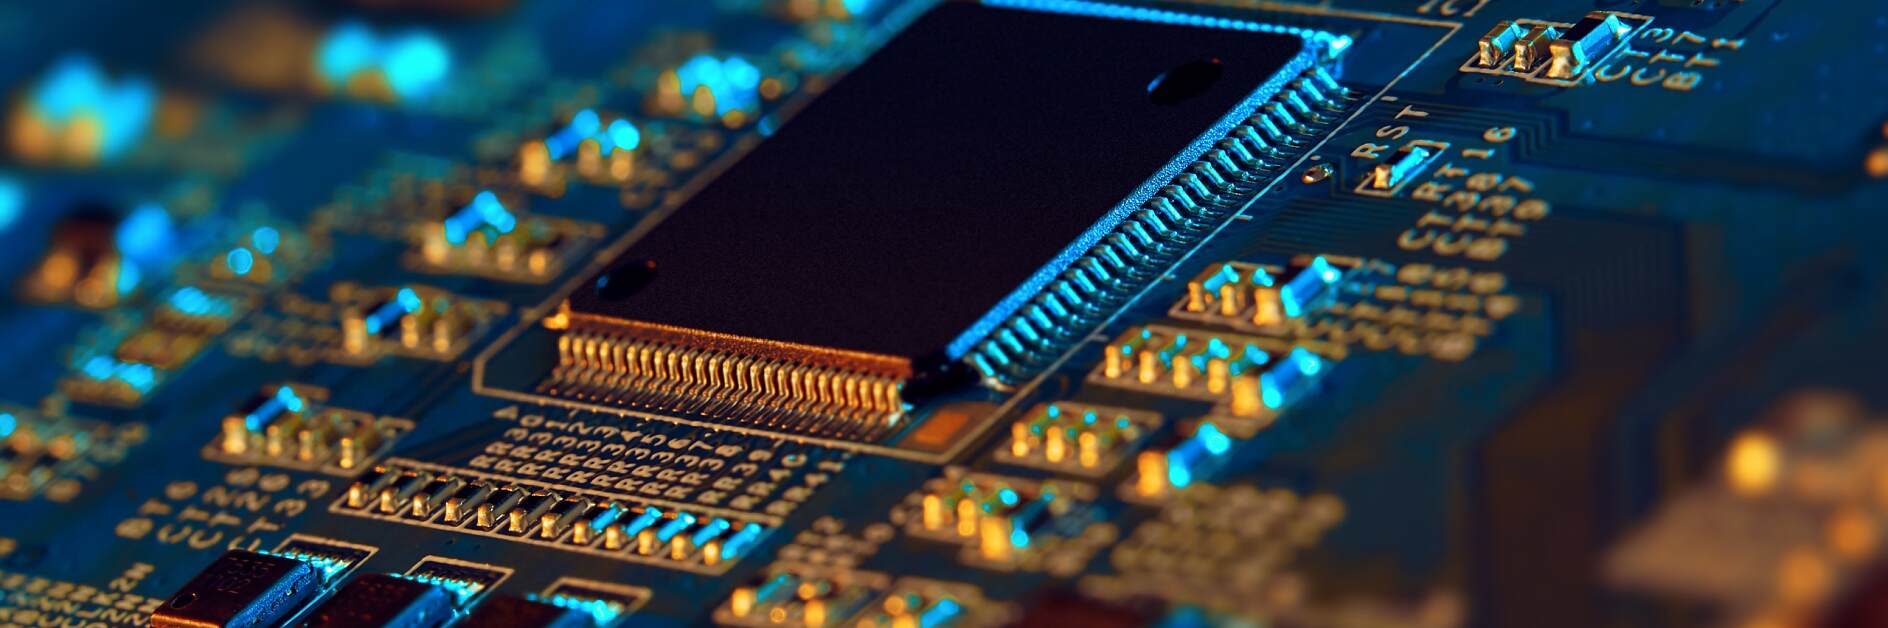 tesa_electronics_computer-chip-on-circuit-board